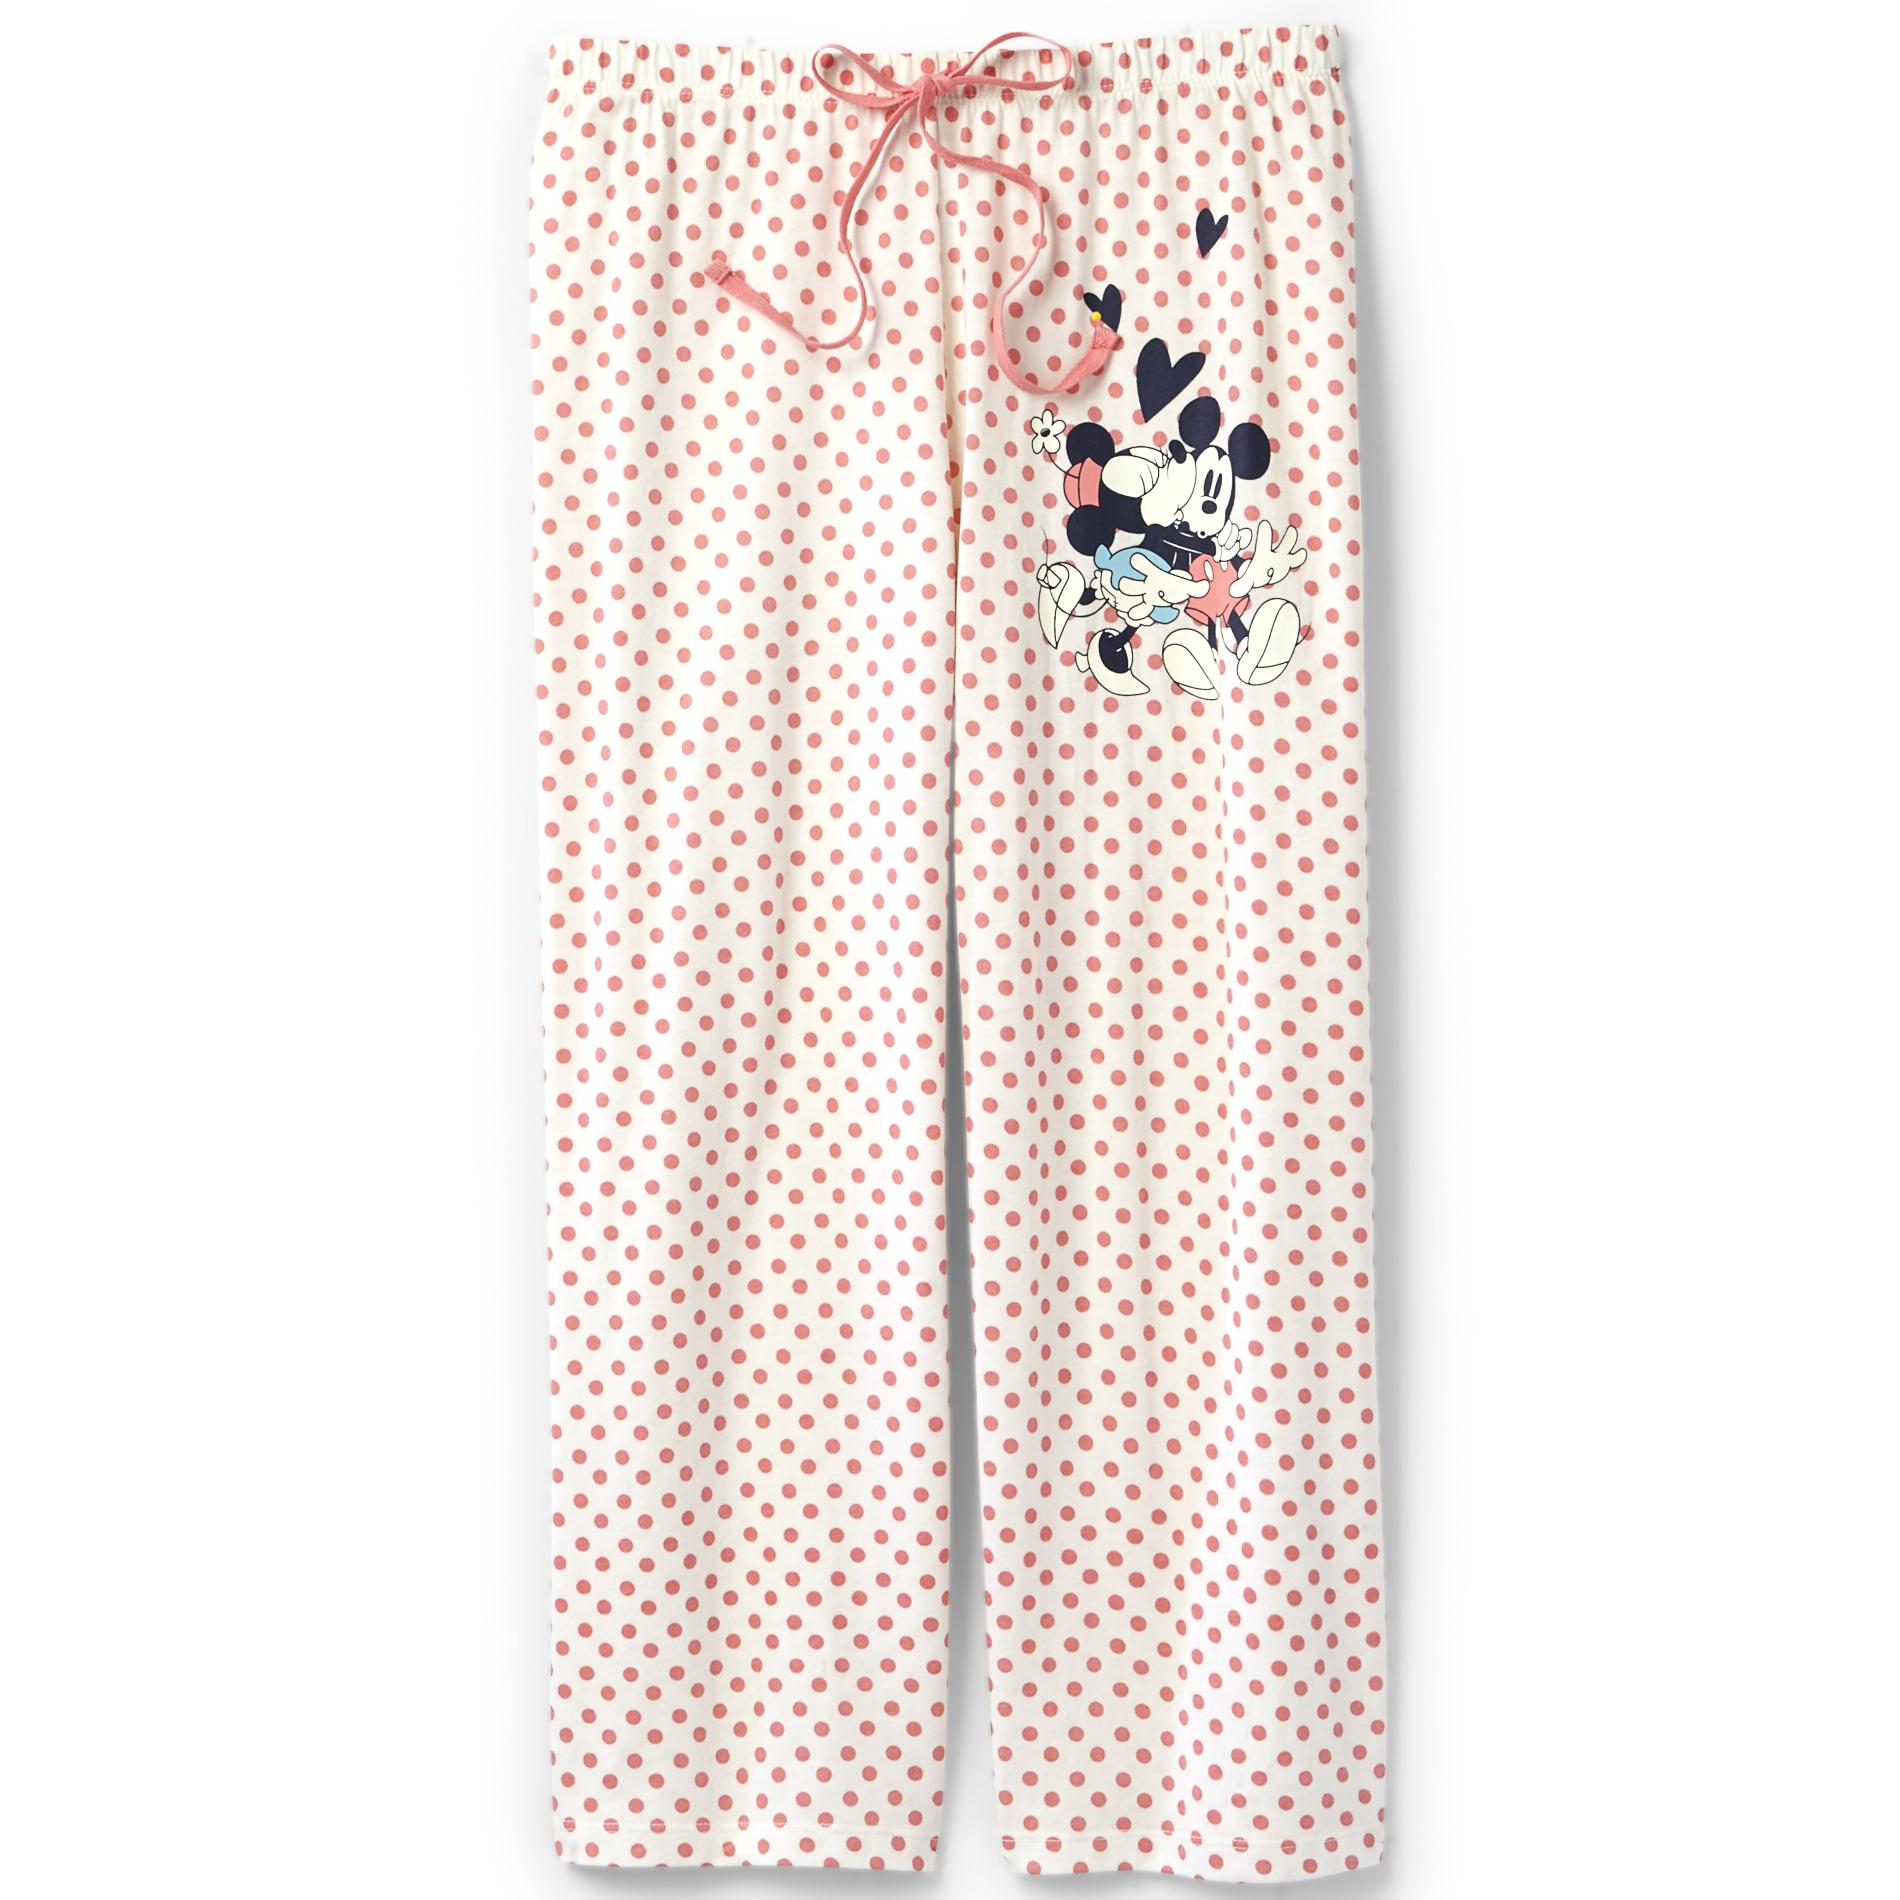 Disney Women's Cropped Pajama Pants - Polka Dots